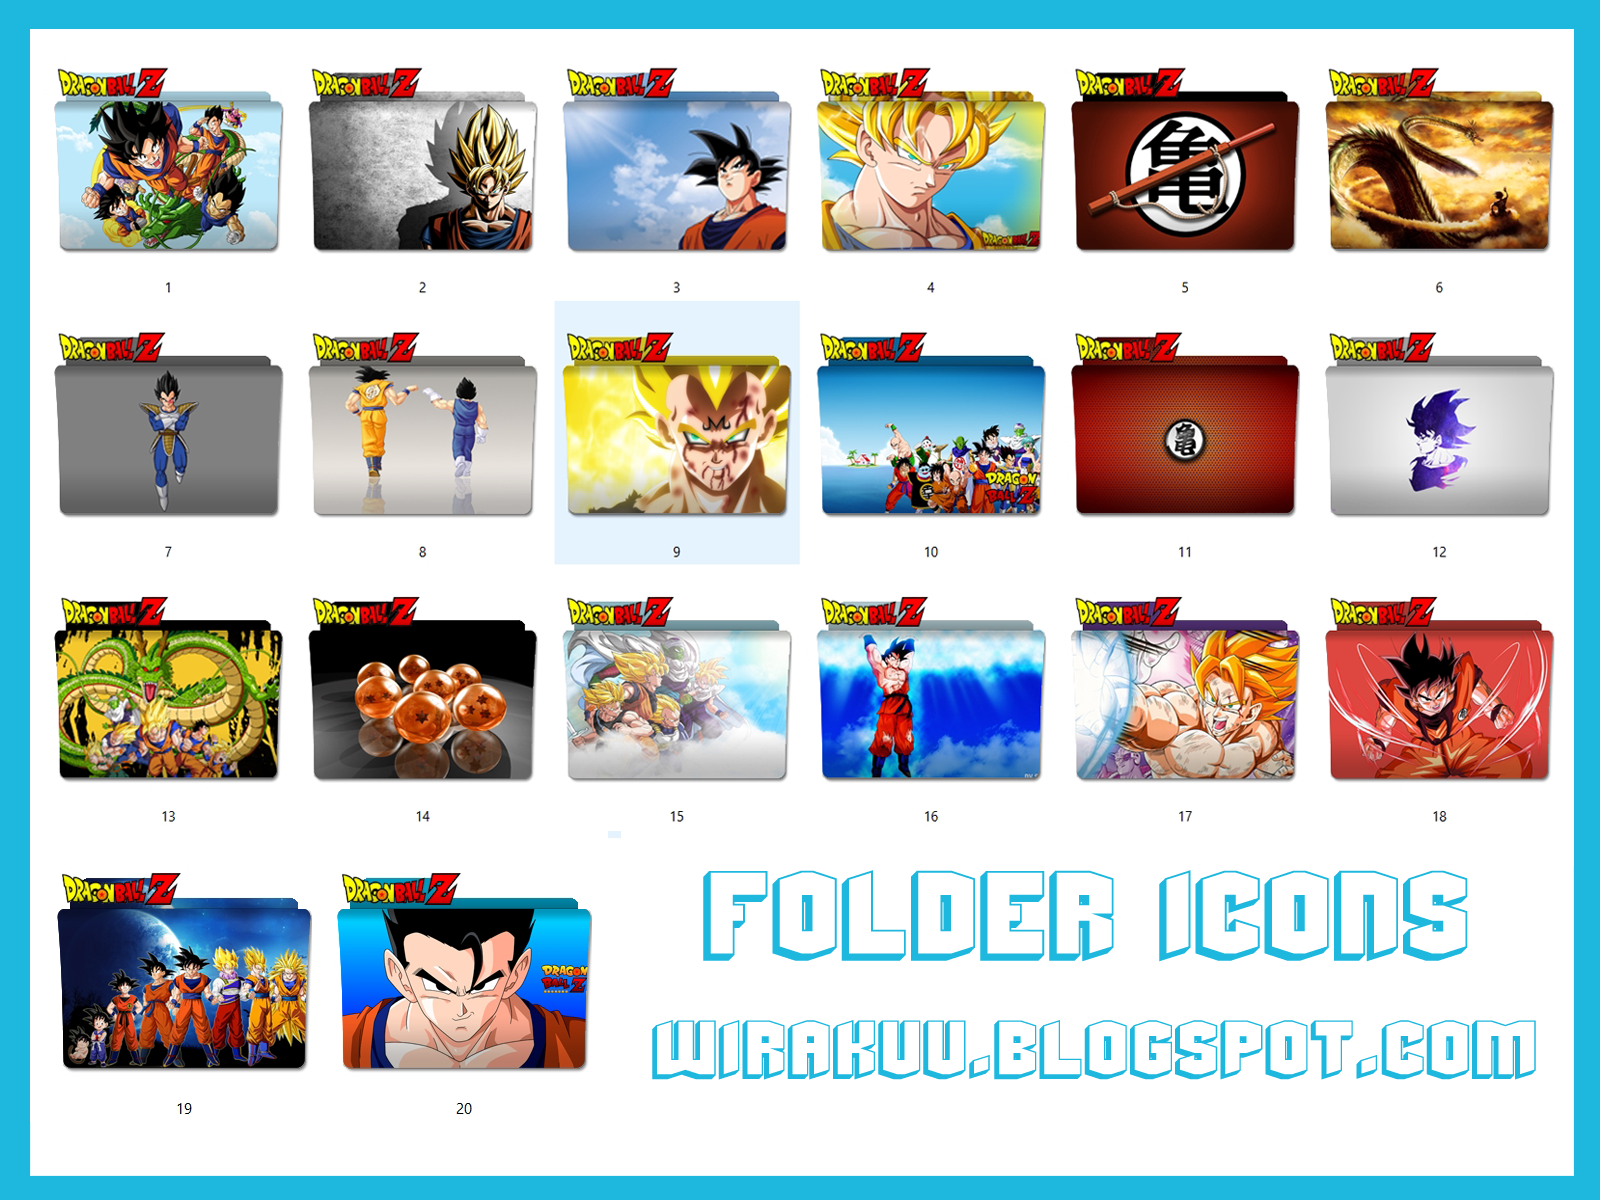 20 Folder Icons Anime Dragon Ball Z 2017 (Windows 7, 8, 10) - Wirakuu